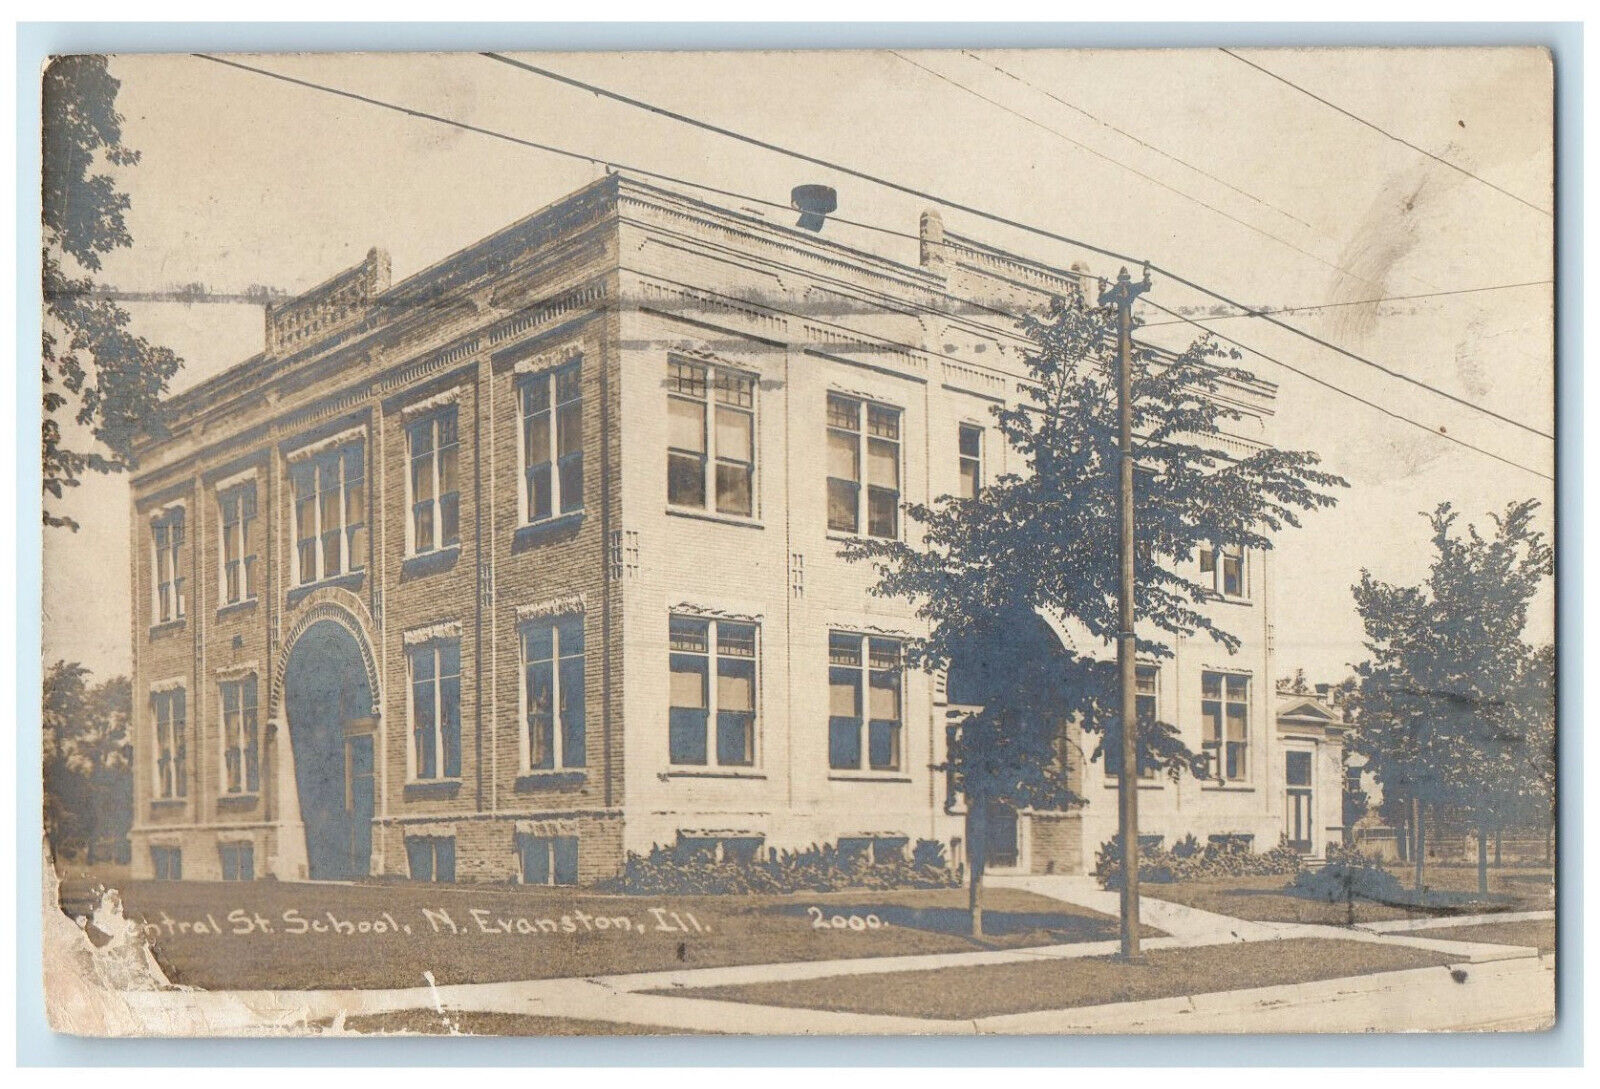 Evanston Illinois IL RPPC Photo Postcard Central Street School Childs 1908